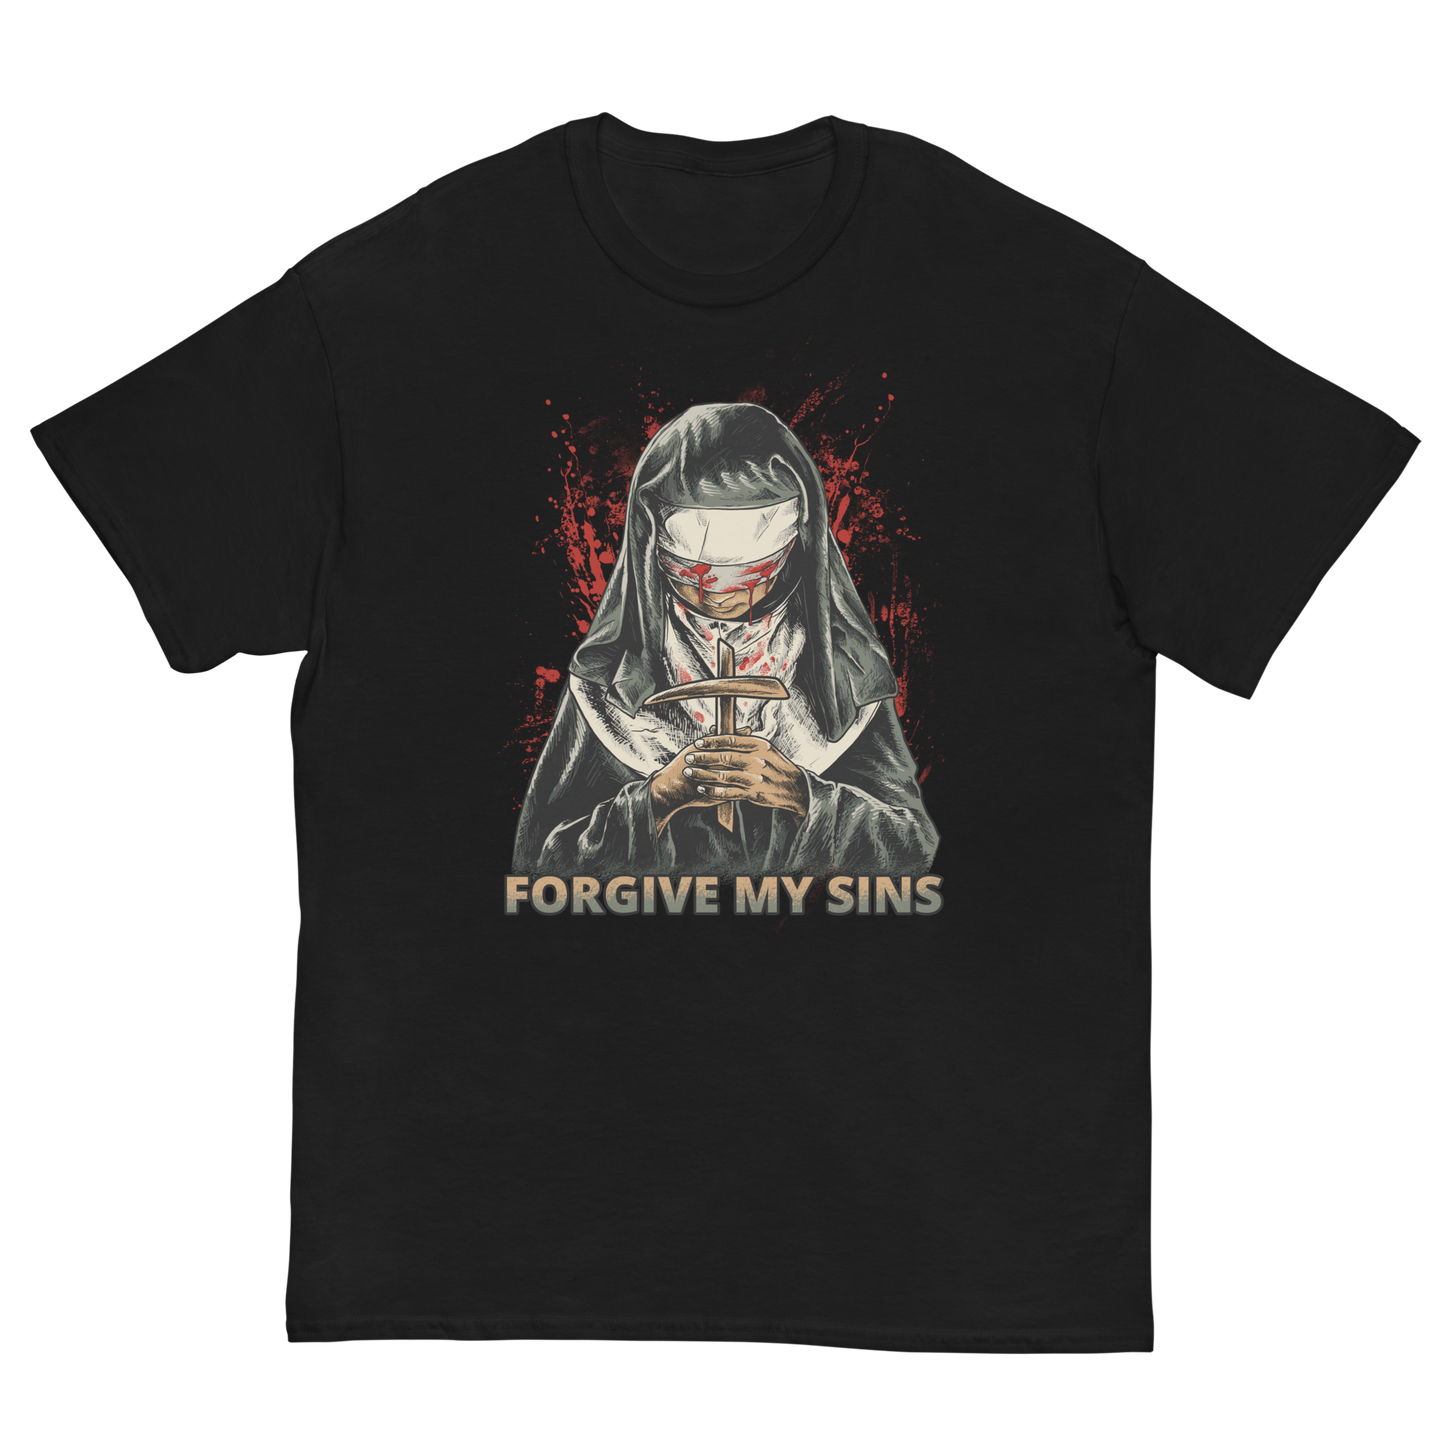 The Hate Club - Forgive My Sins Blood T-Shirt